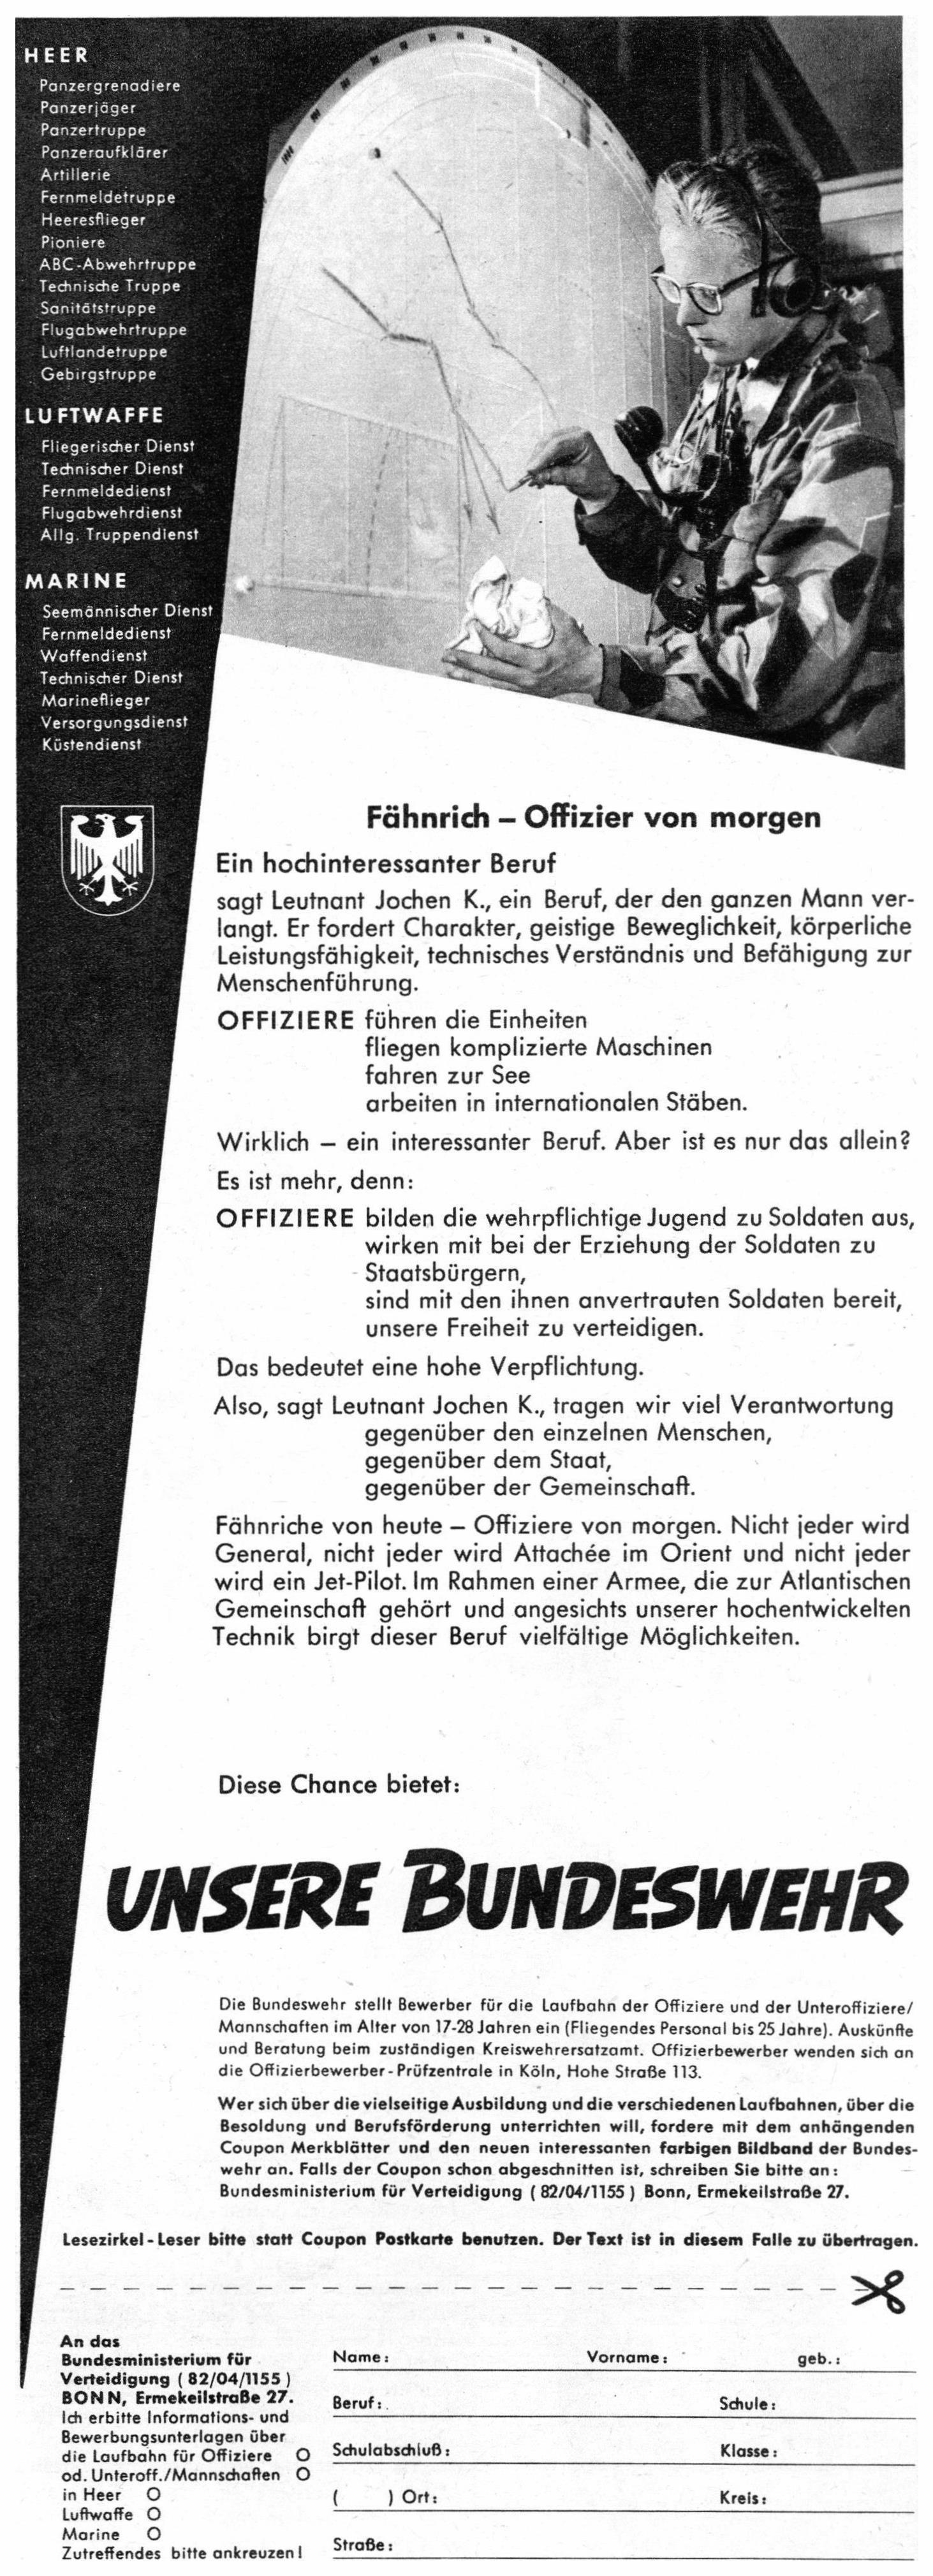 Bundeswehr 1960 0.jpg